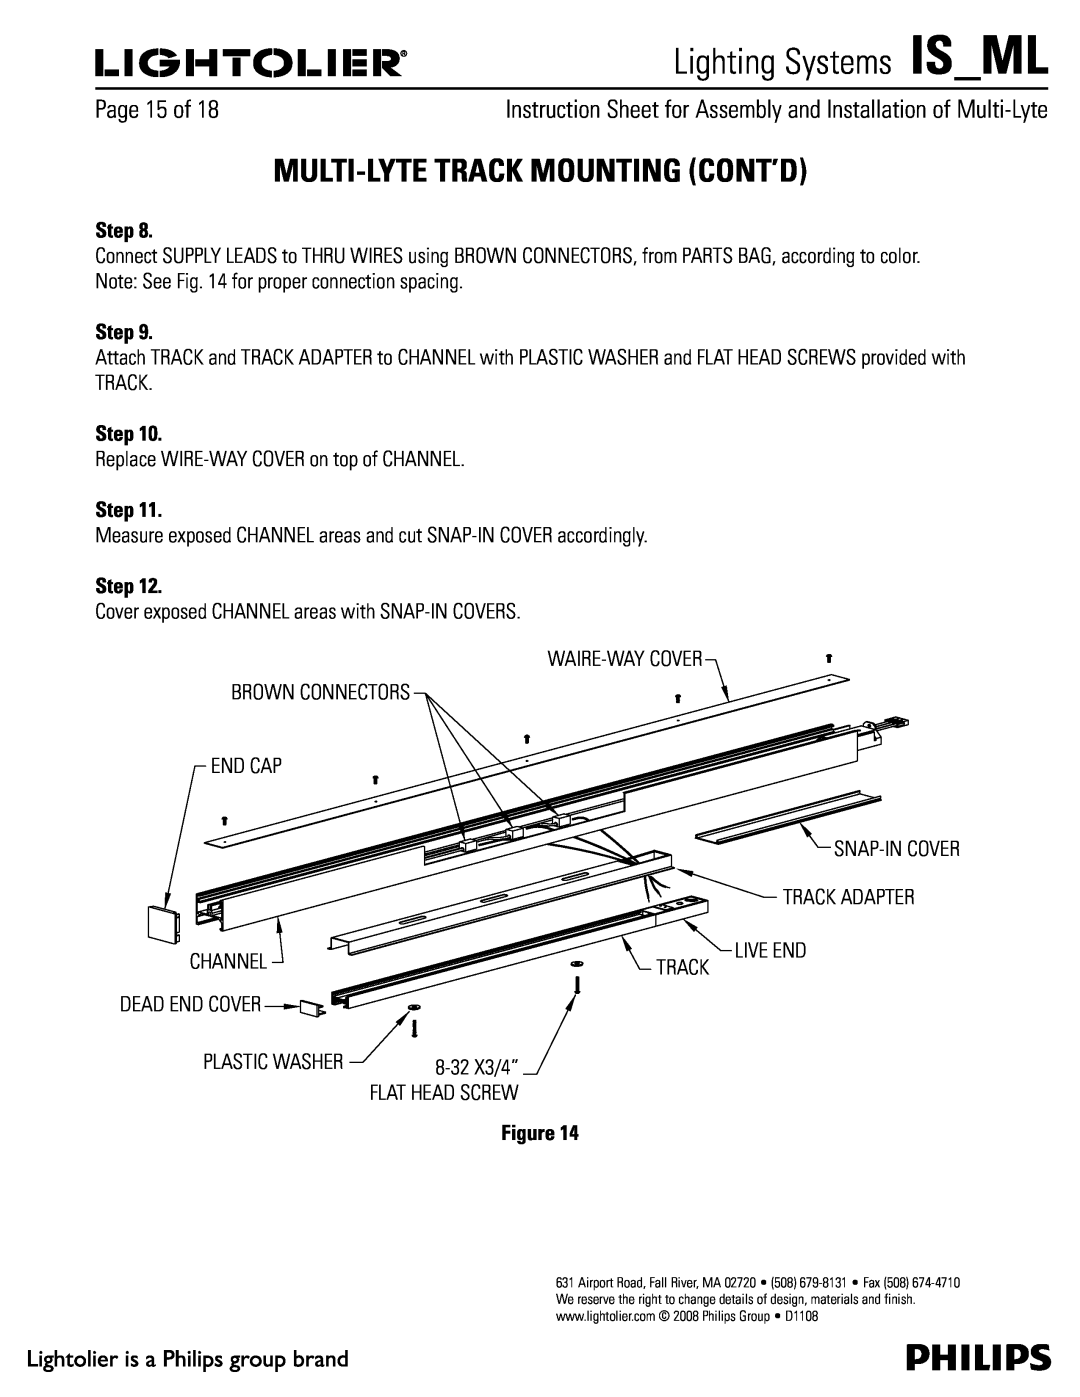 Lightolier MMC & MFC, MMA & MFA, MMD & MFD Multi-Lytetrack Mounting Cont’D, 1BHFPG, Lighting Systems IS ML, Step 